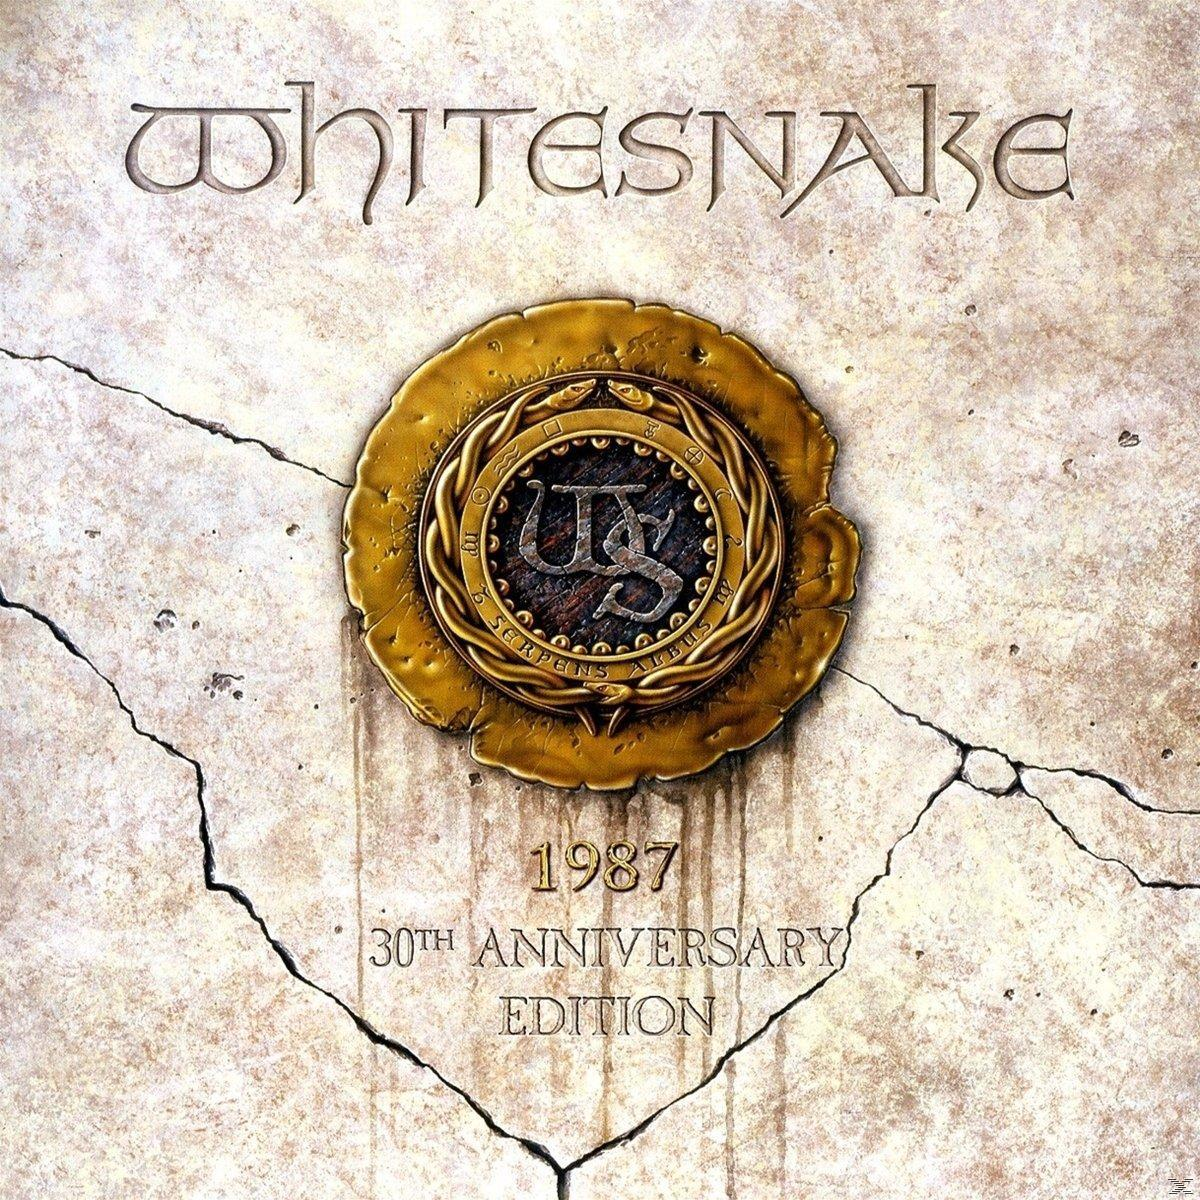 1987 - Edition) Anniversary (Vinyl) Whitesnake - (30th